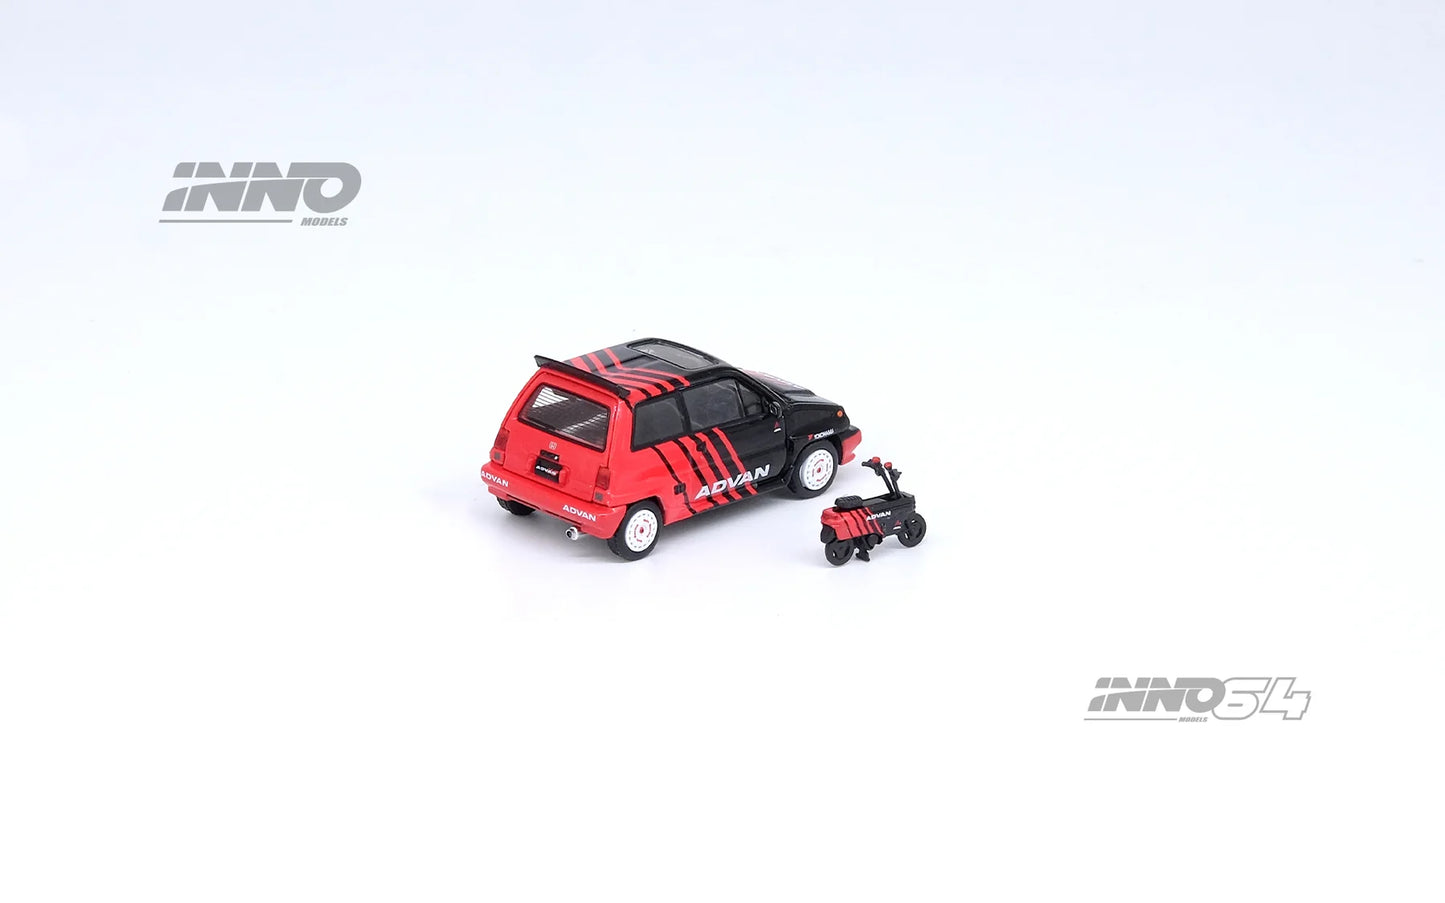 Inno64 Honda City Turbo II Advan Livery with Motocompo 1:64